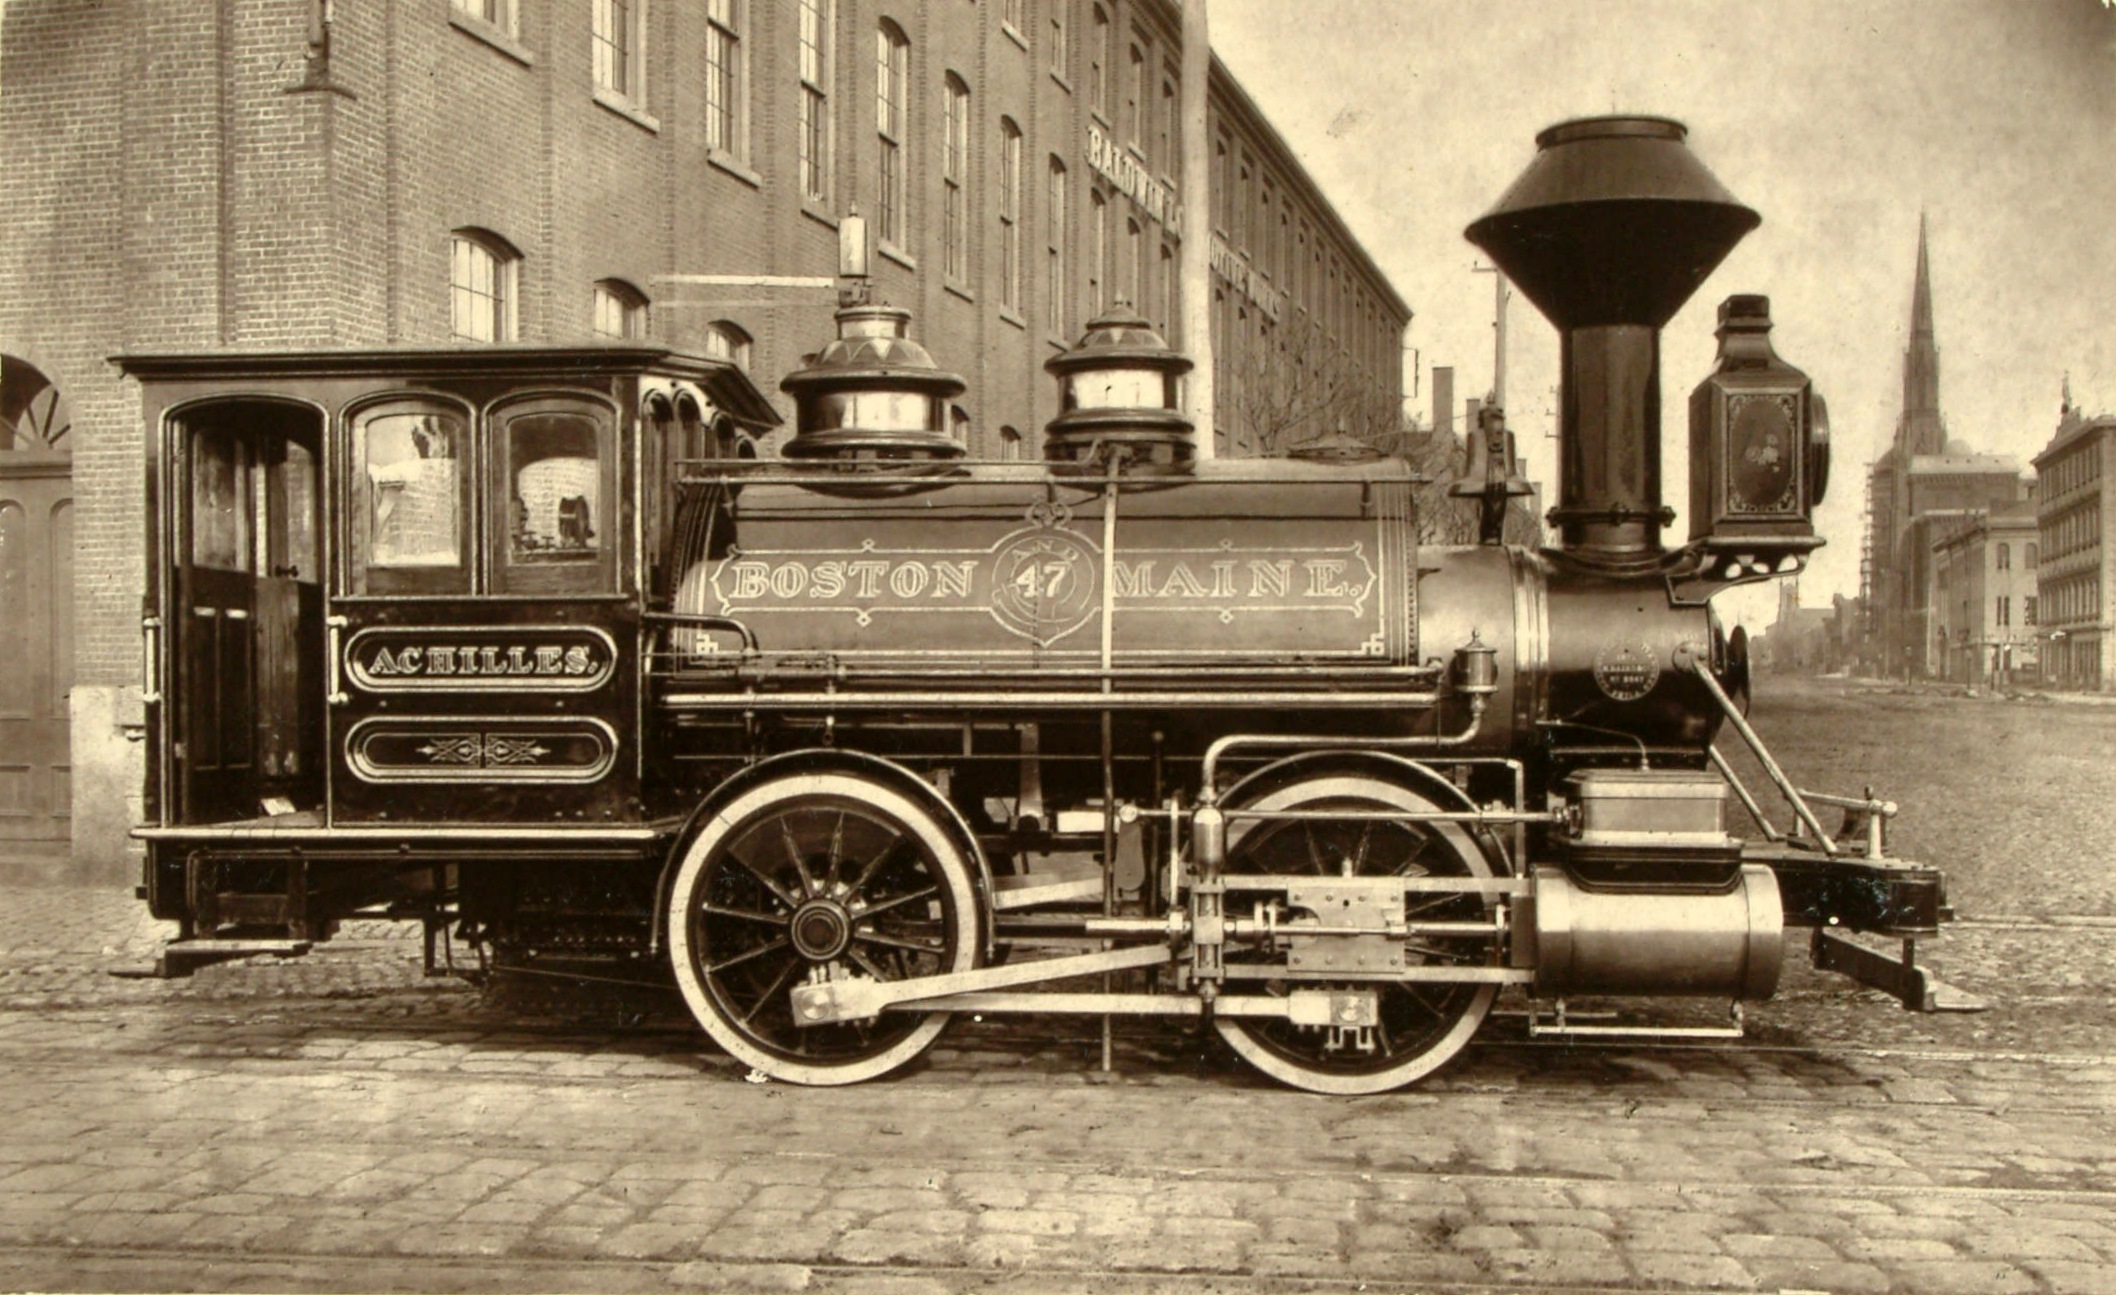 Locomotive #5